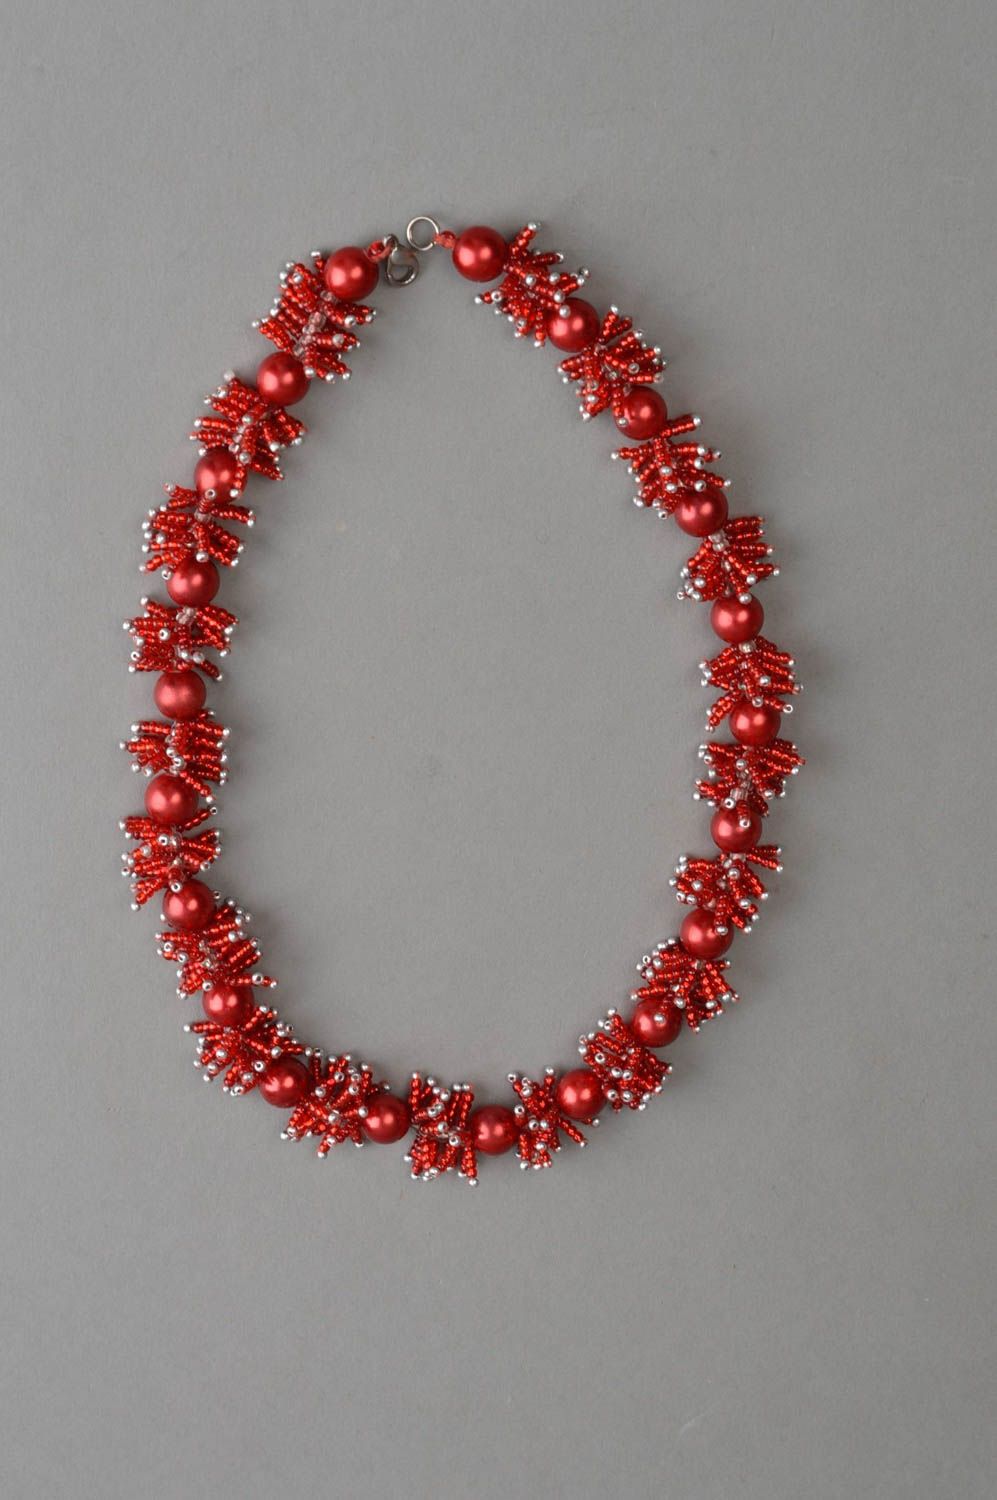 Stylish homemade beaded necklace designer evening jewelry bead weaving ideas photo 2